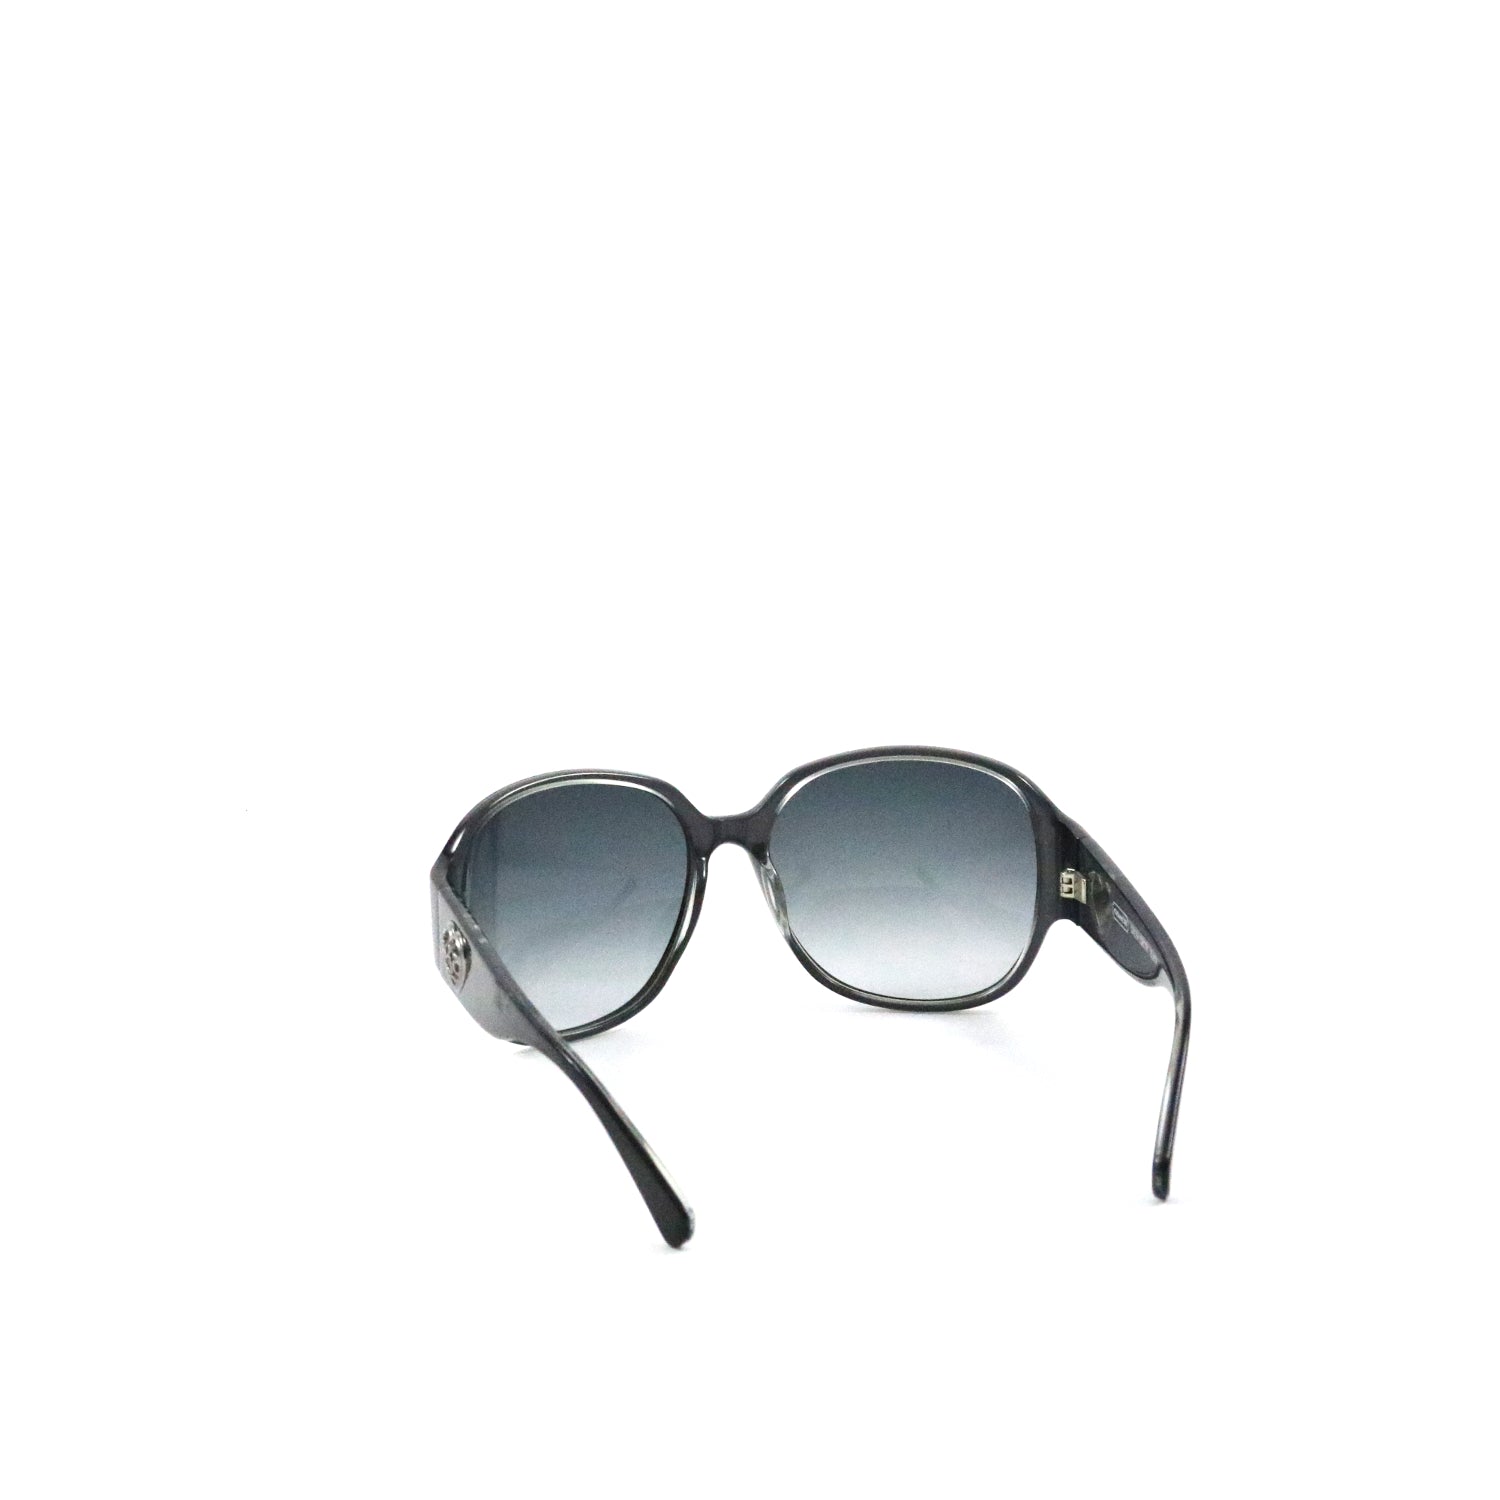 Greer Sunglasses